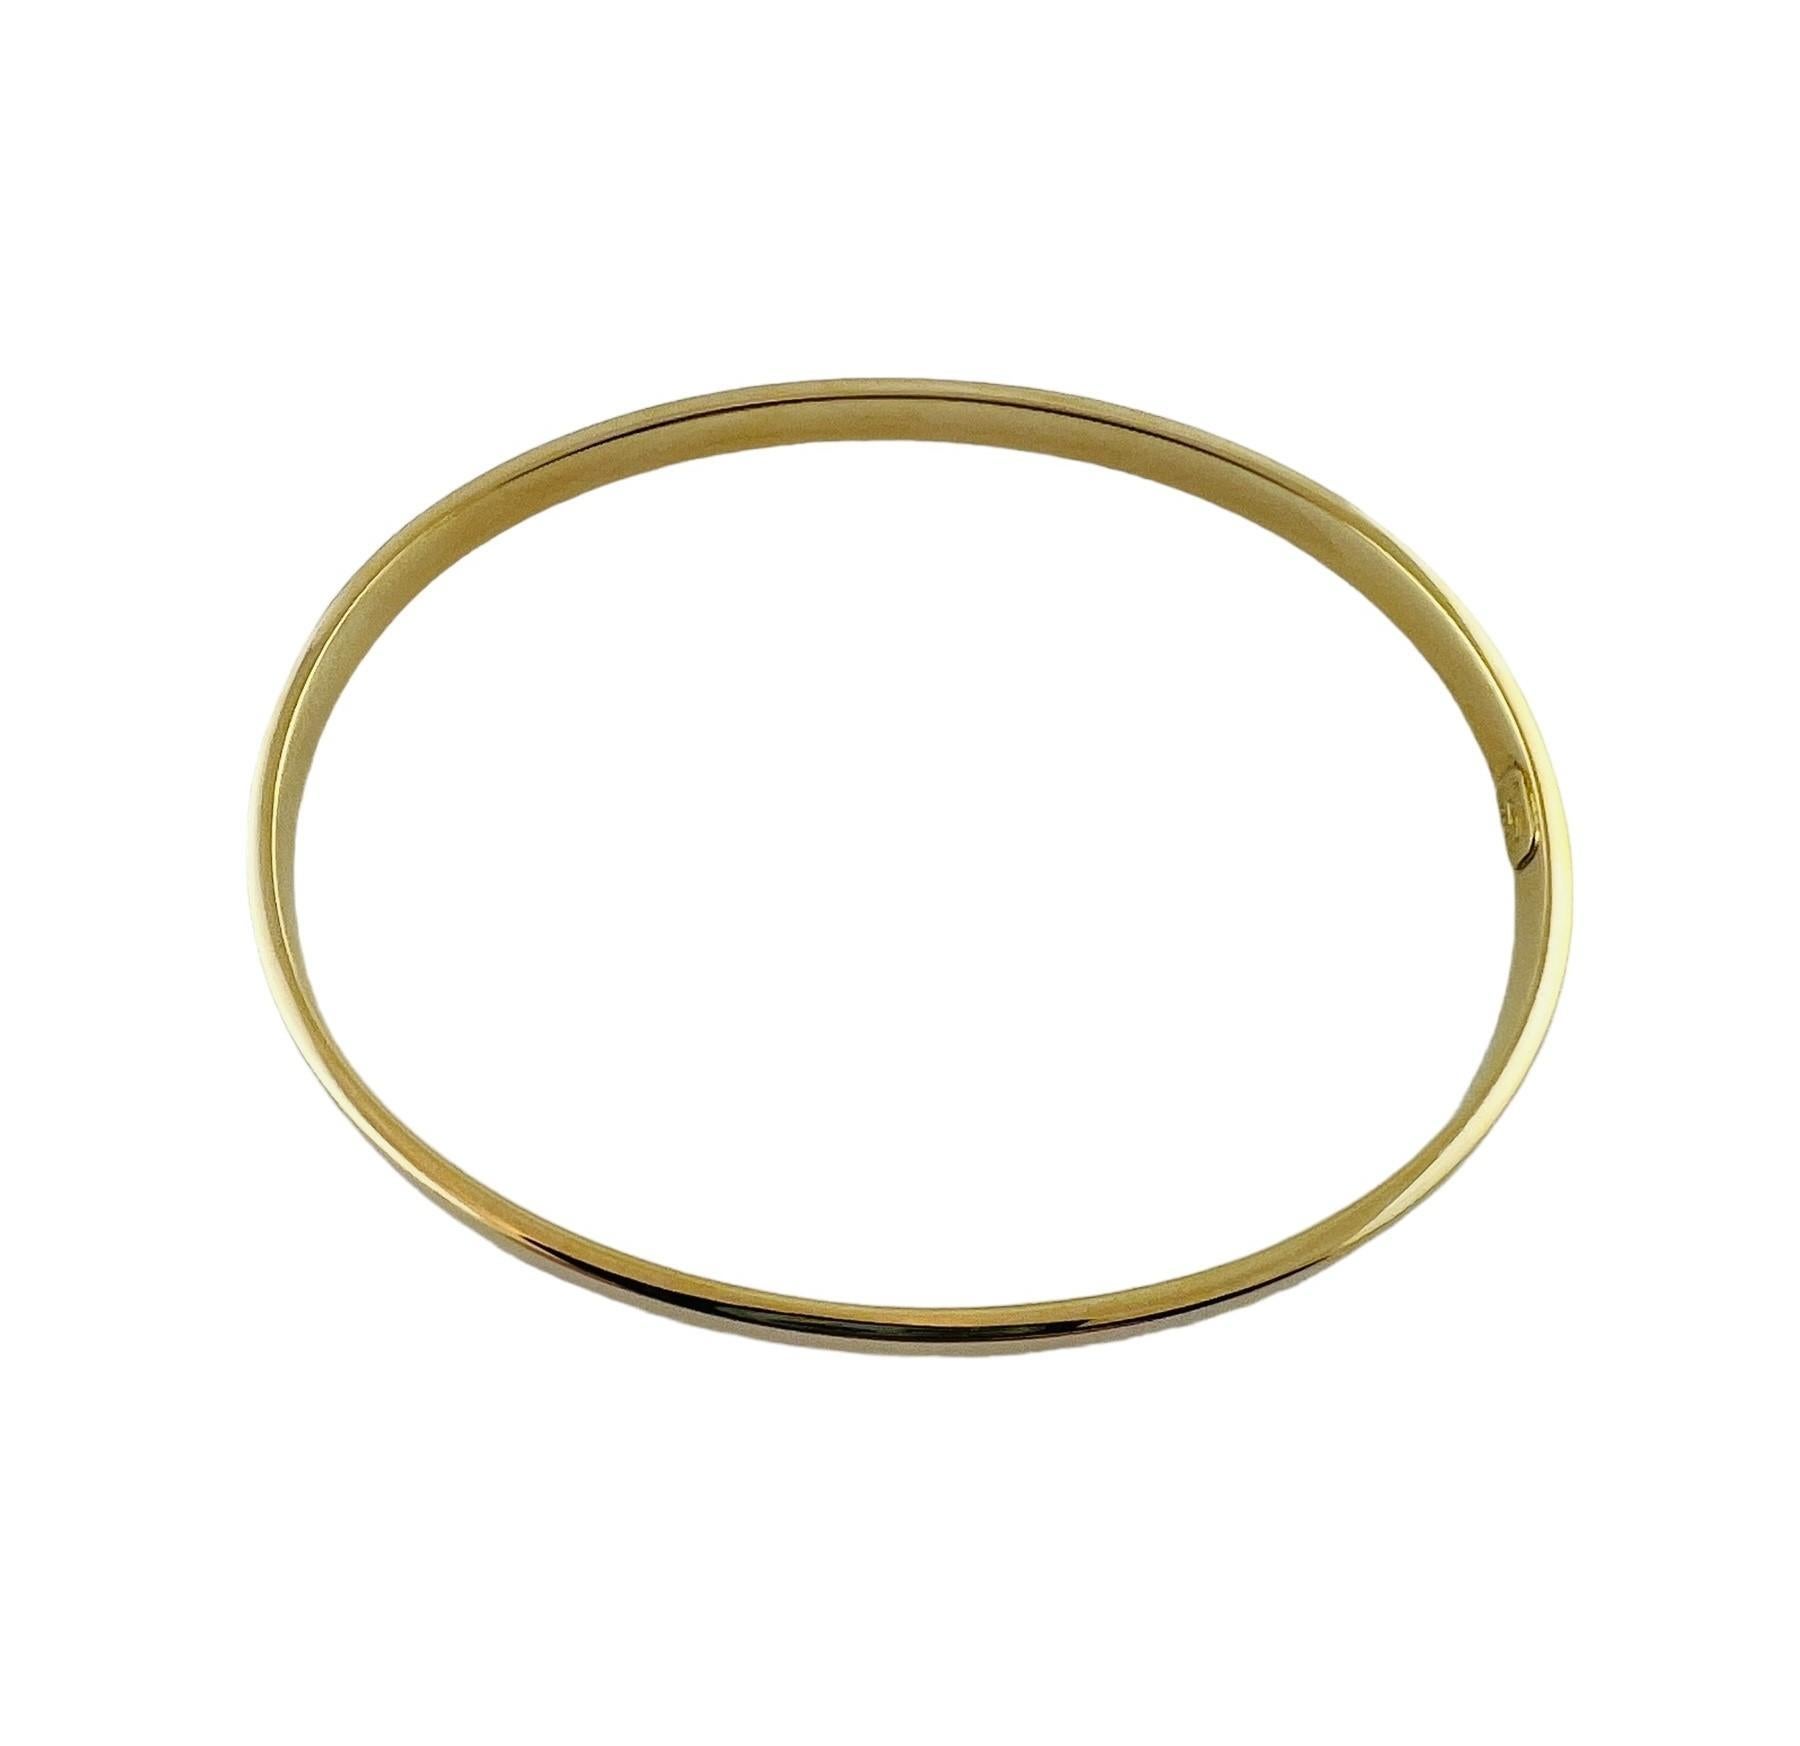 Tiffany & Co. 18K Yellow Gold Oval Bangle Bracelet #16675 3